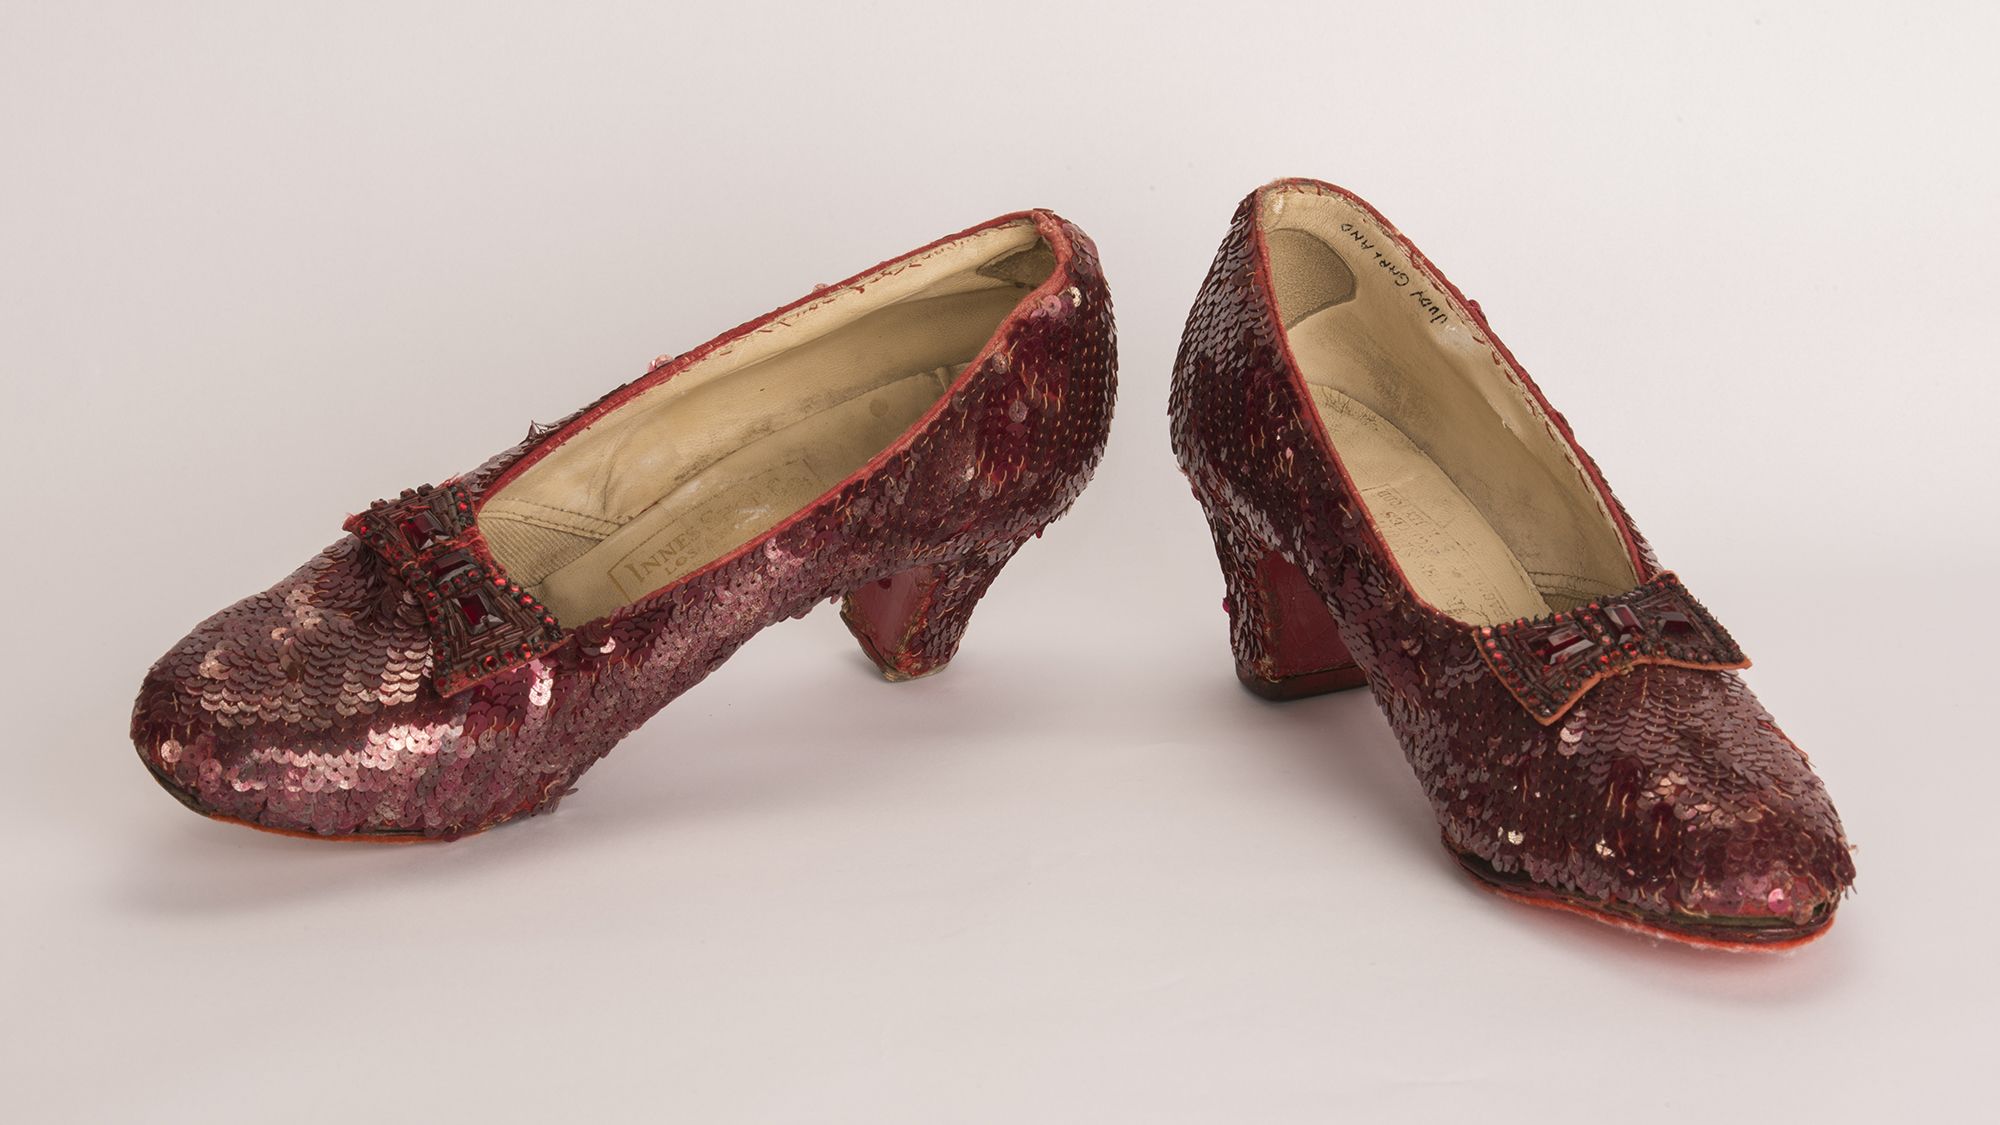 Stolen 'Wizard of Oz' slippers found 13 years |